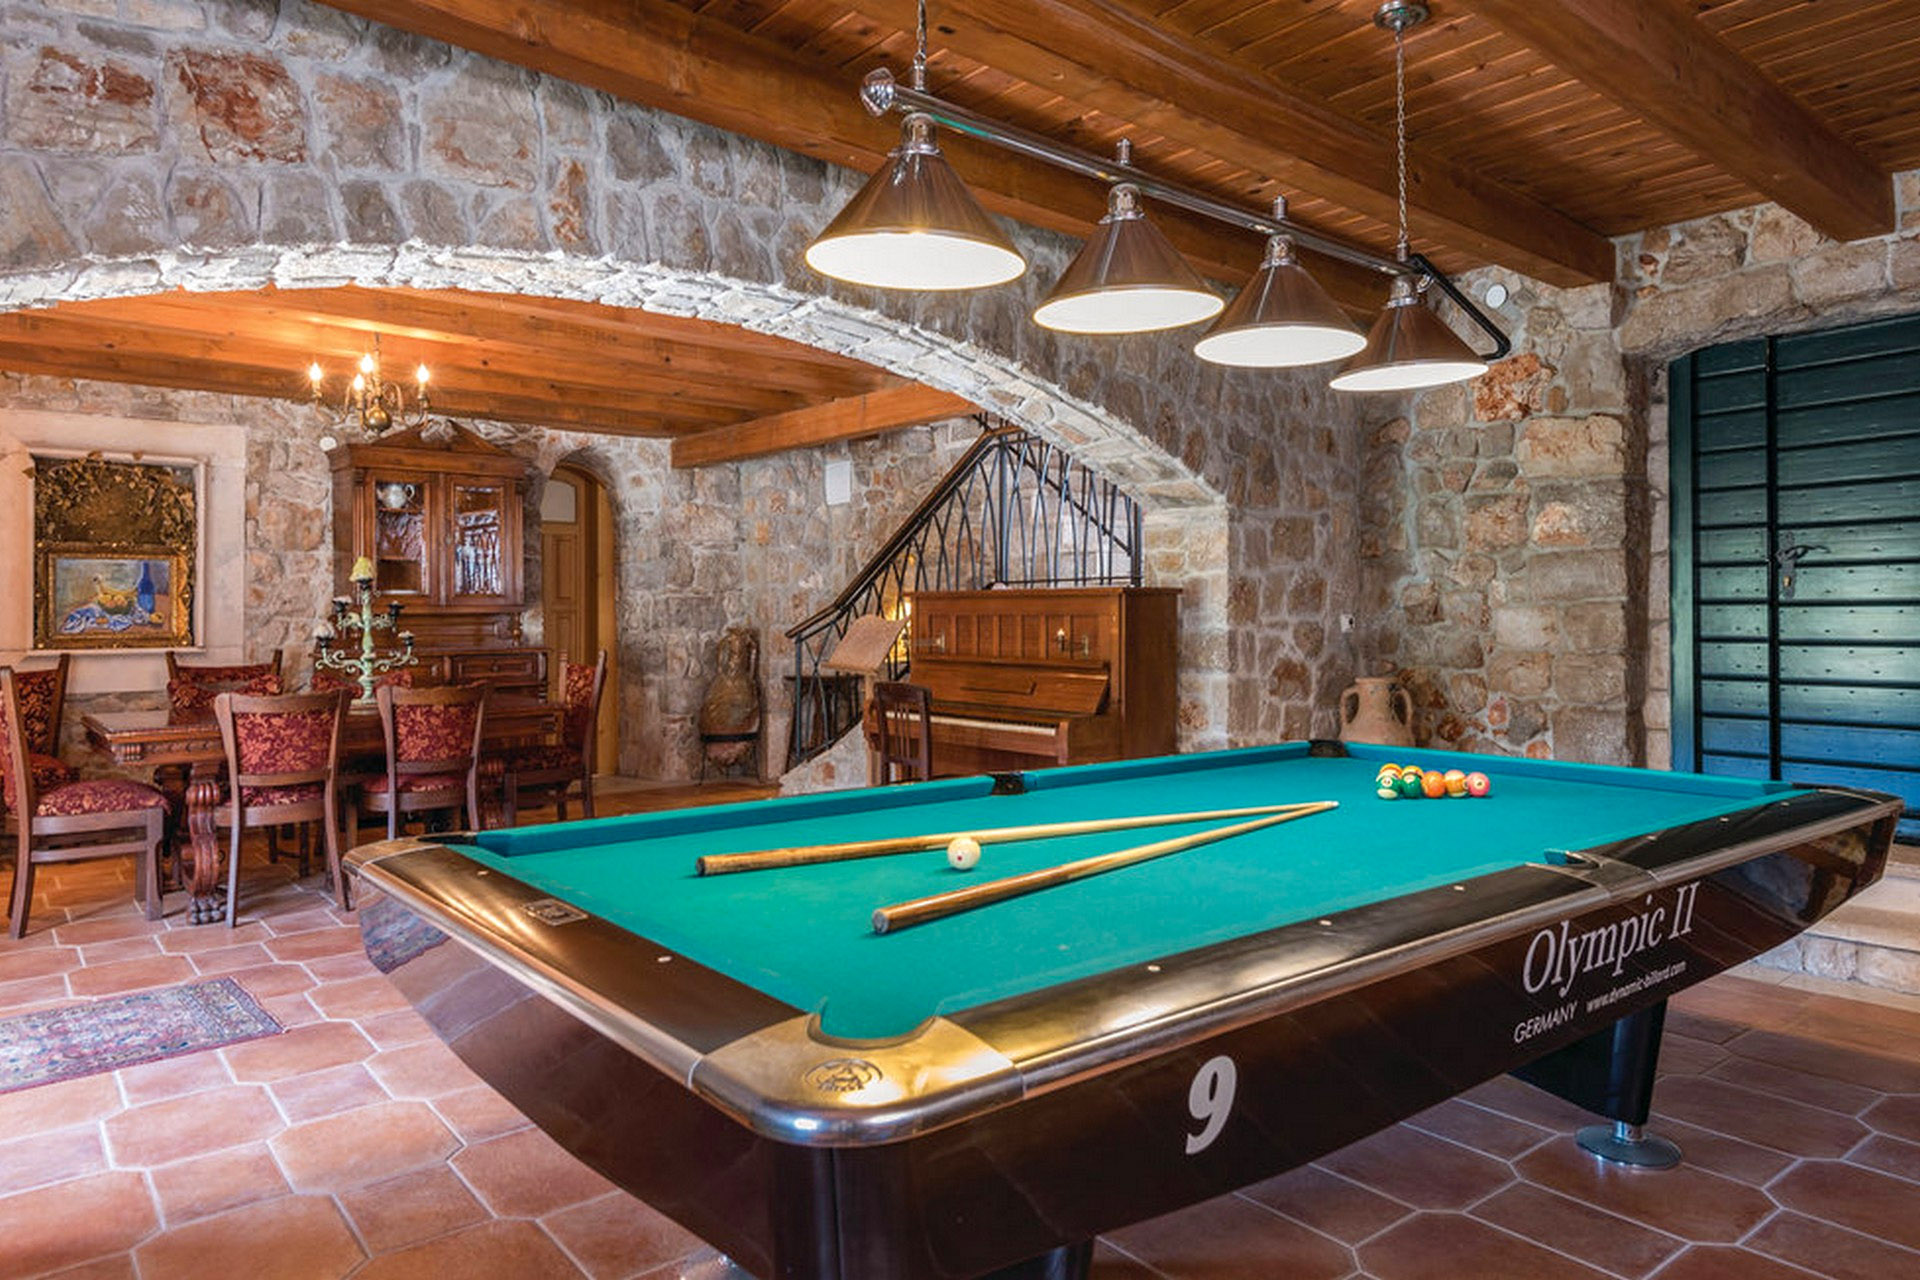 Stone house for sale Peljesac peninsula, Croatia, Dubrovnik, mansion, buy villa